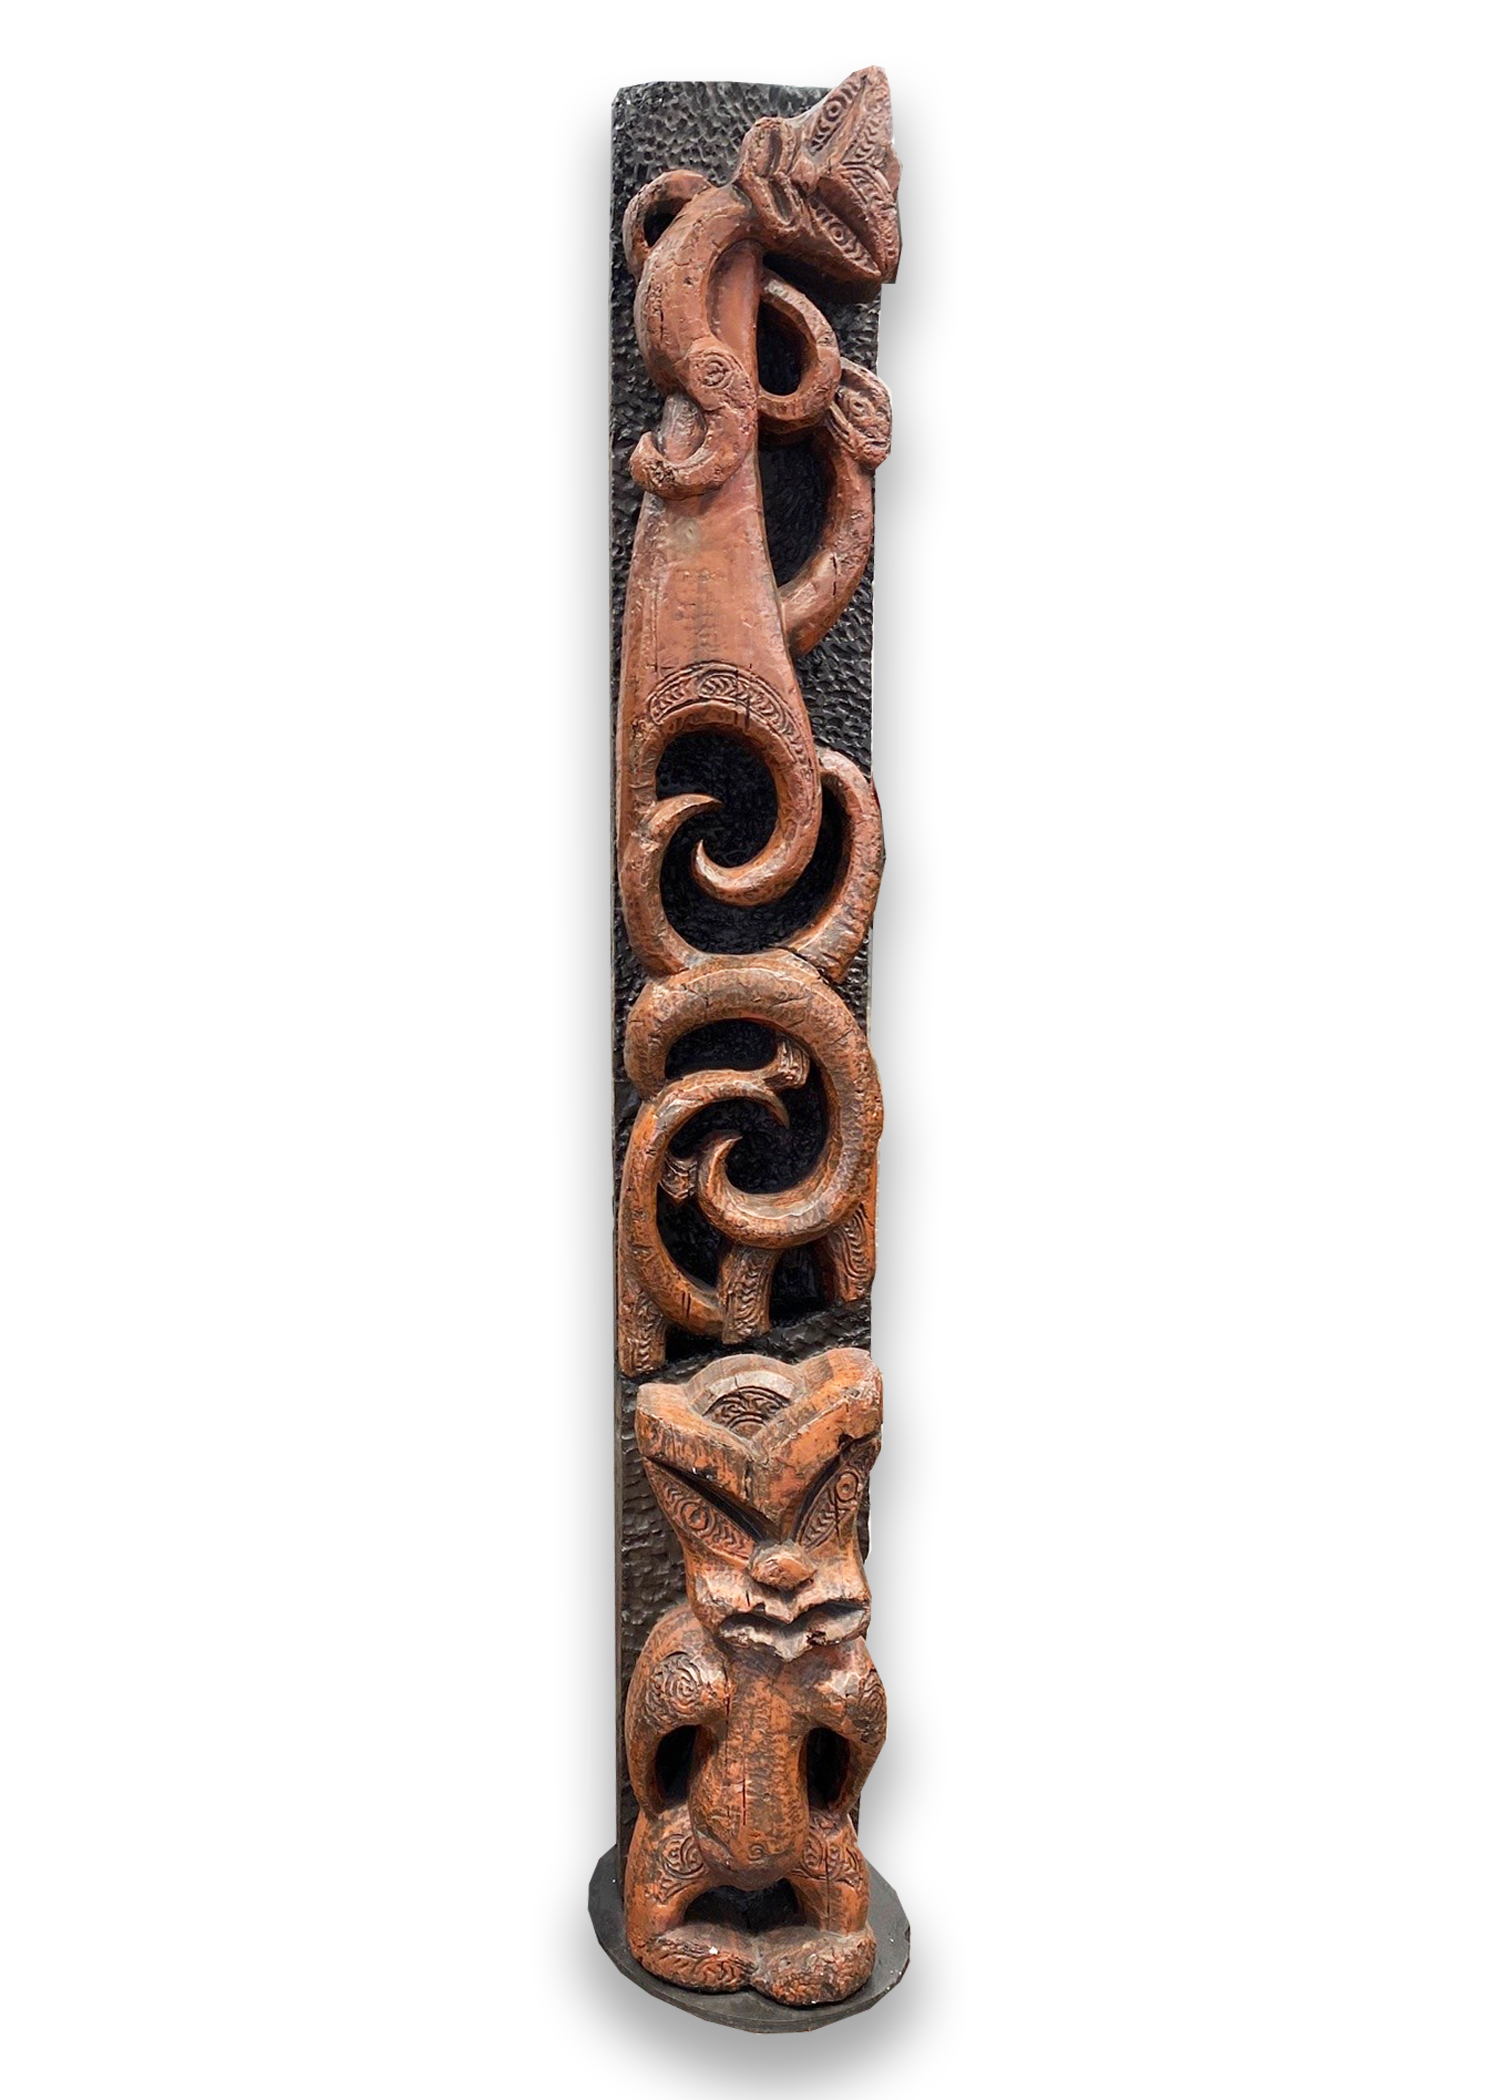 Maori Carving #6 (H: 2.2 m)